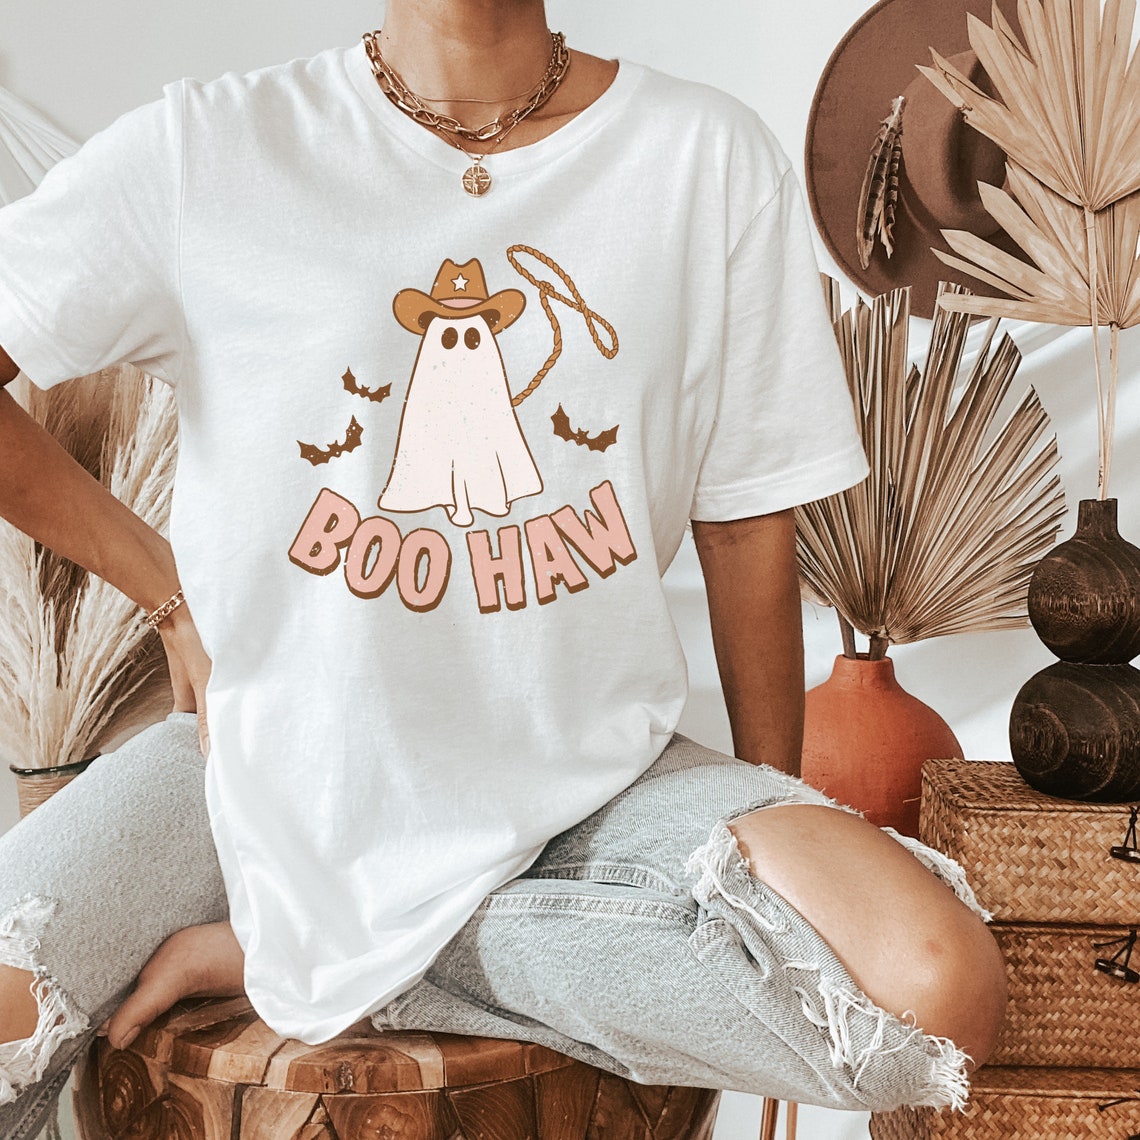 Halloween Shirt, Fall Shirt, Cowgirl Ghost, Cute Ghost Shirt, Boo Haw Ghost T-shirt, Retro Ghost Tee, Ghost Shirt, Halloween Party Shirt